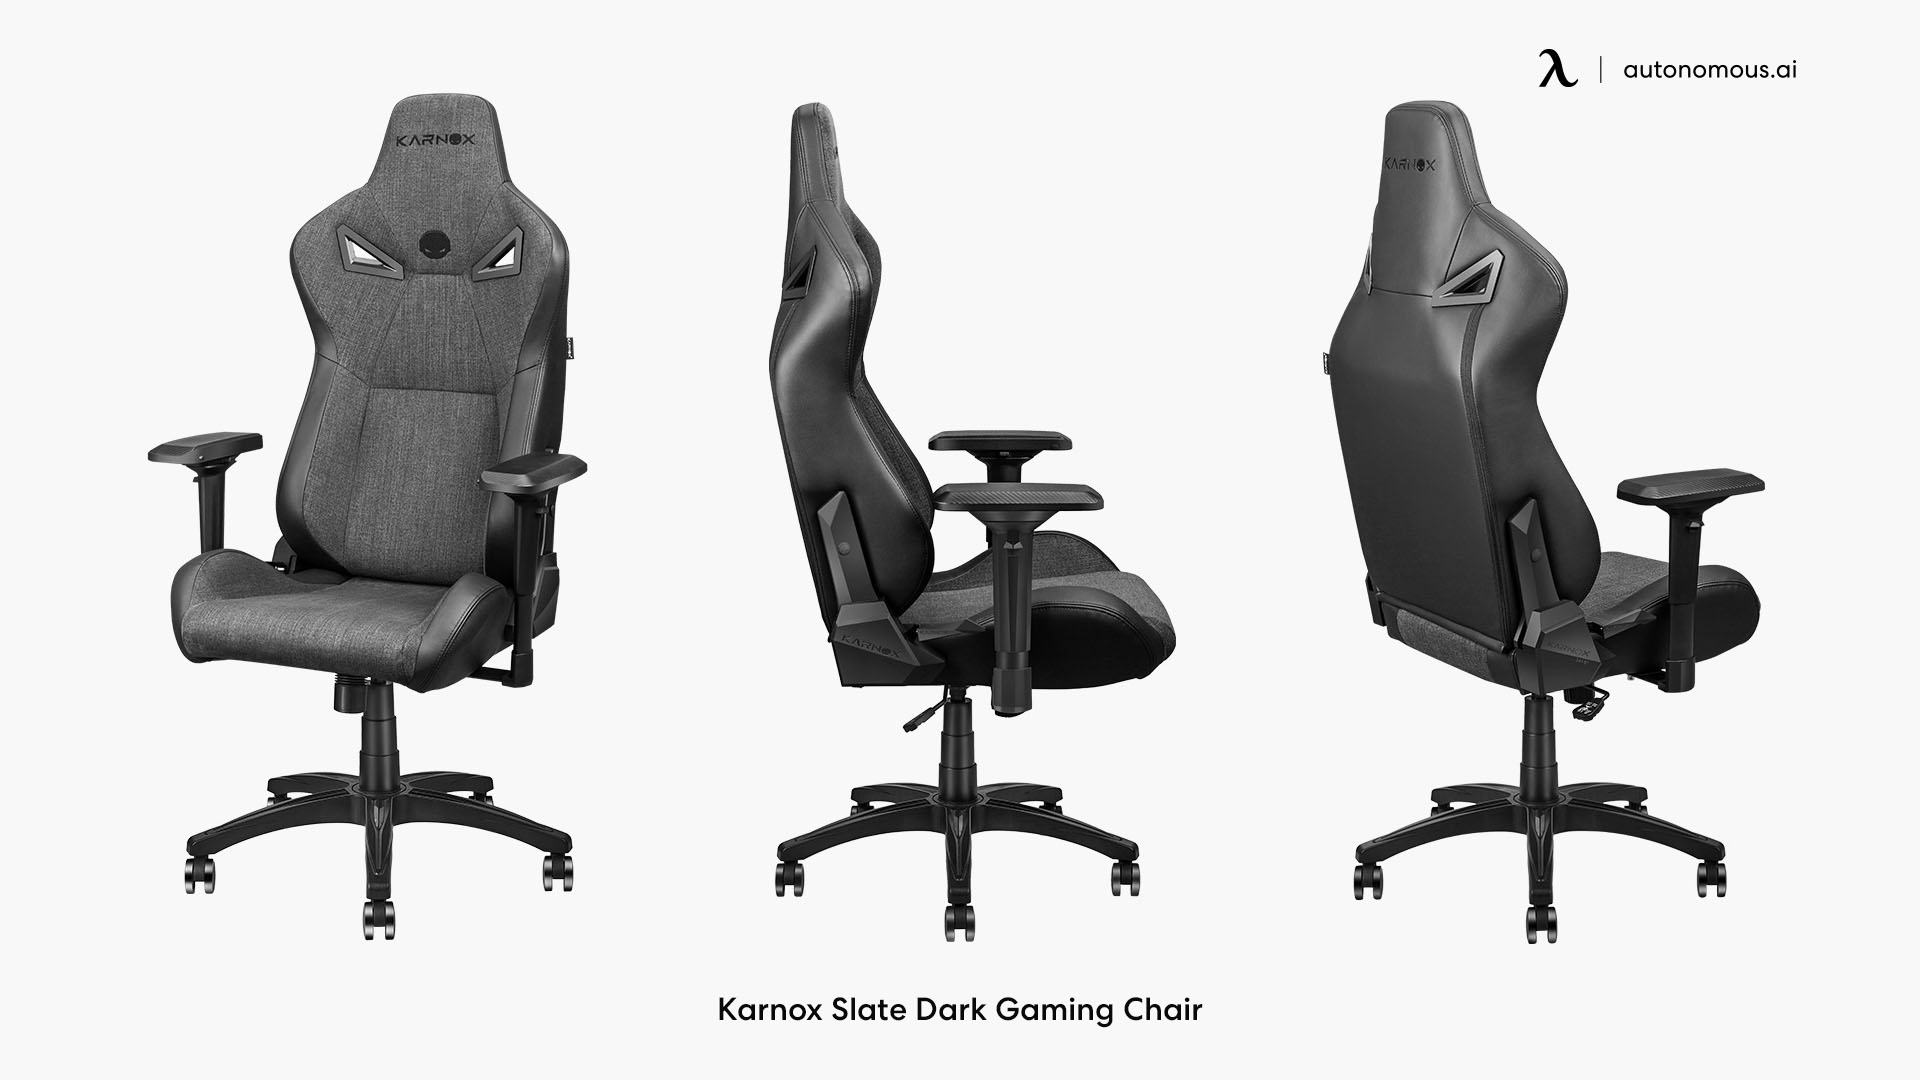 Karnox Slate Dark Gaming Chair